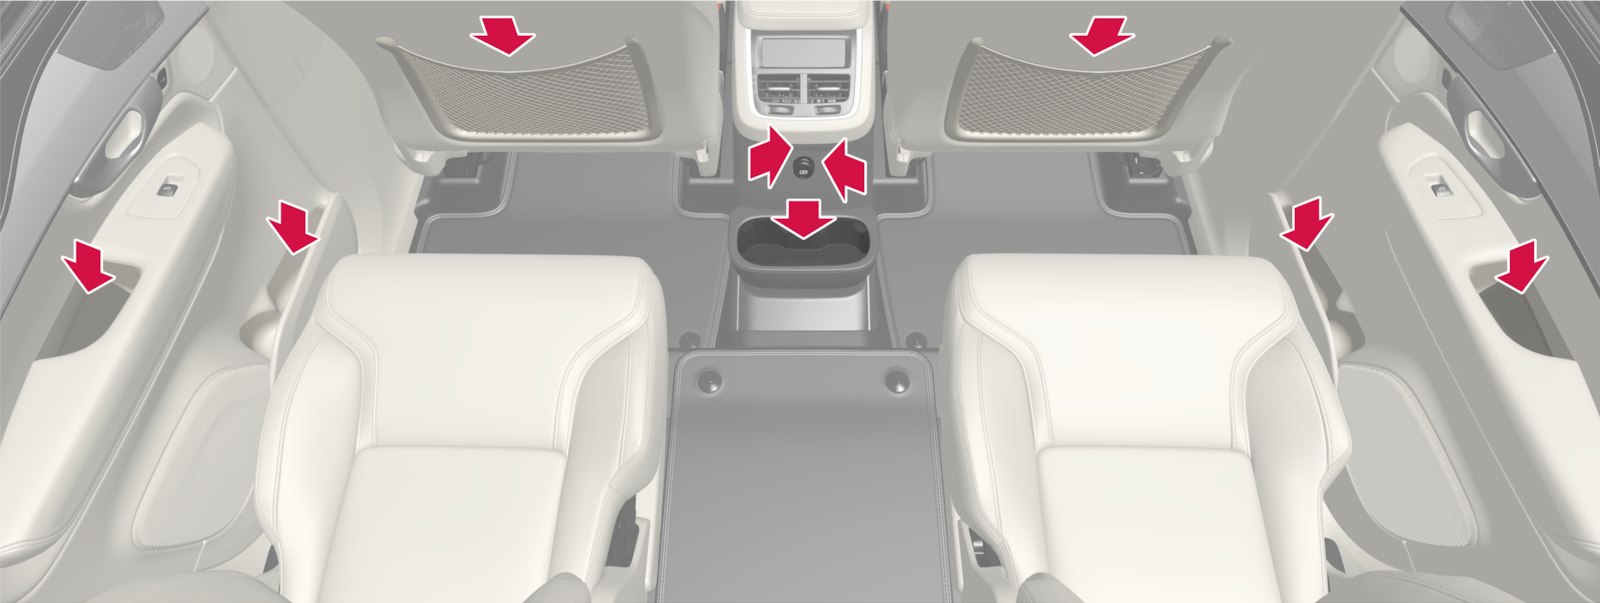 P5-2222-XC90+XC90H-Interior–Overview interior second seat row-6 seats